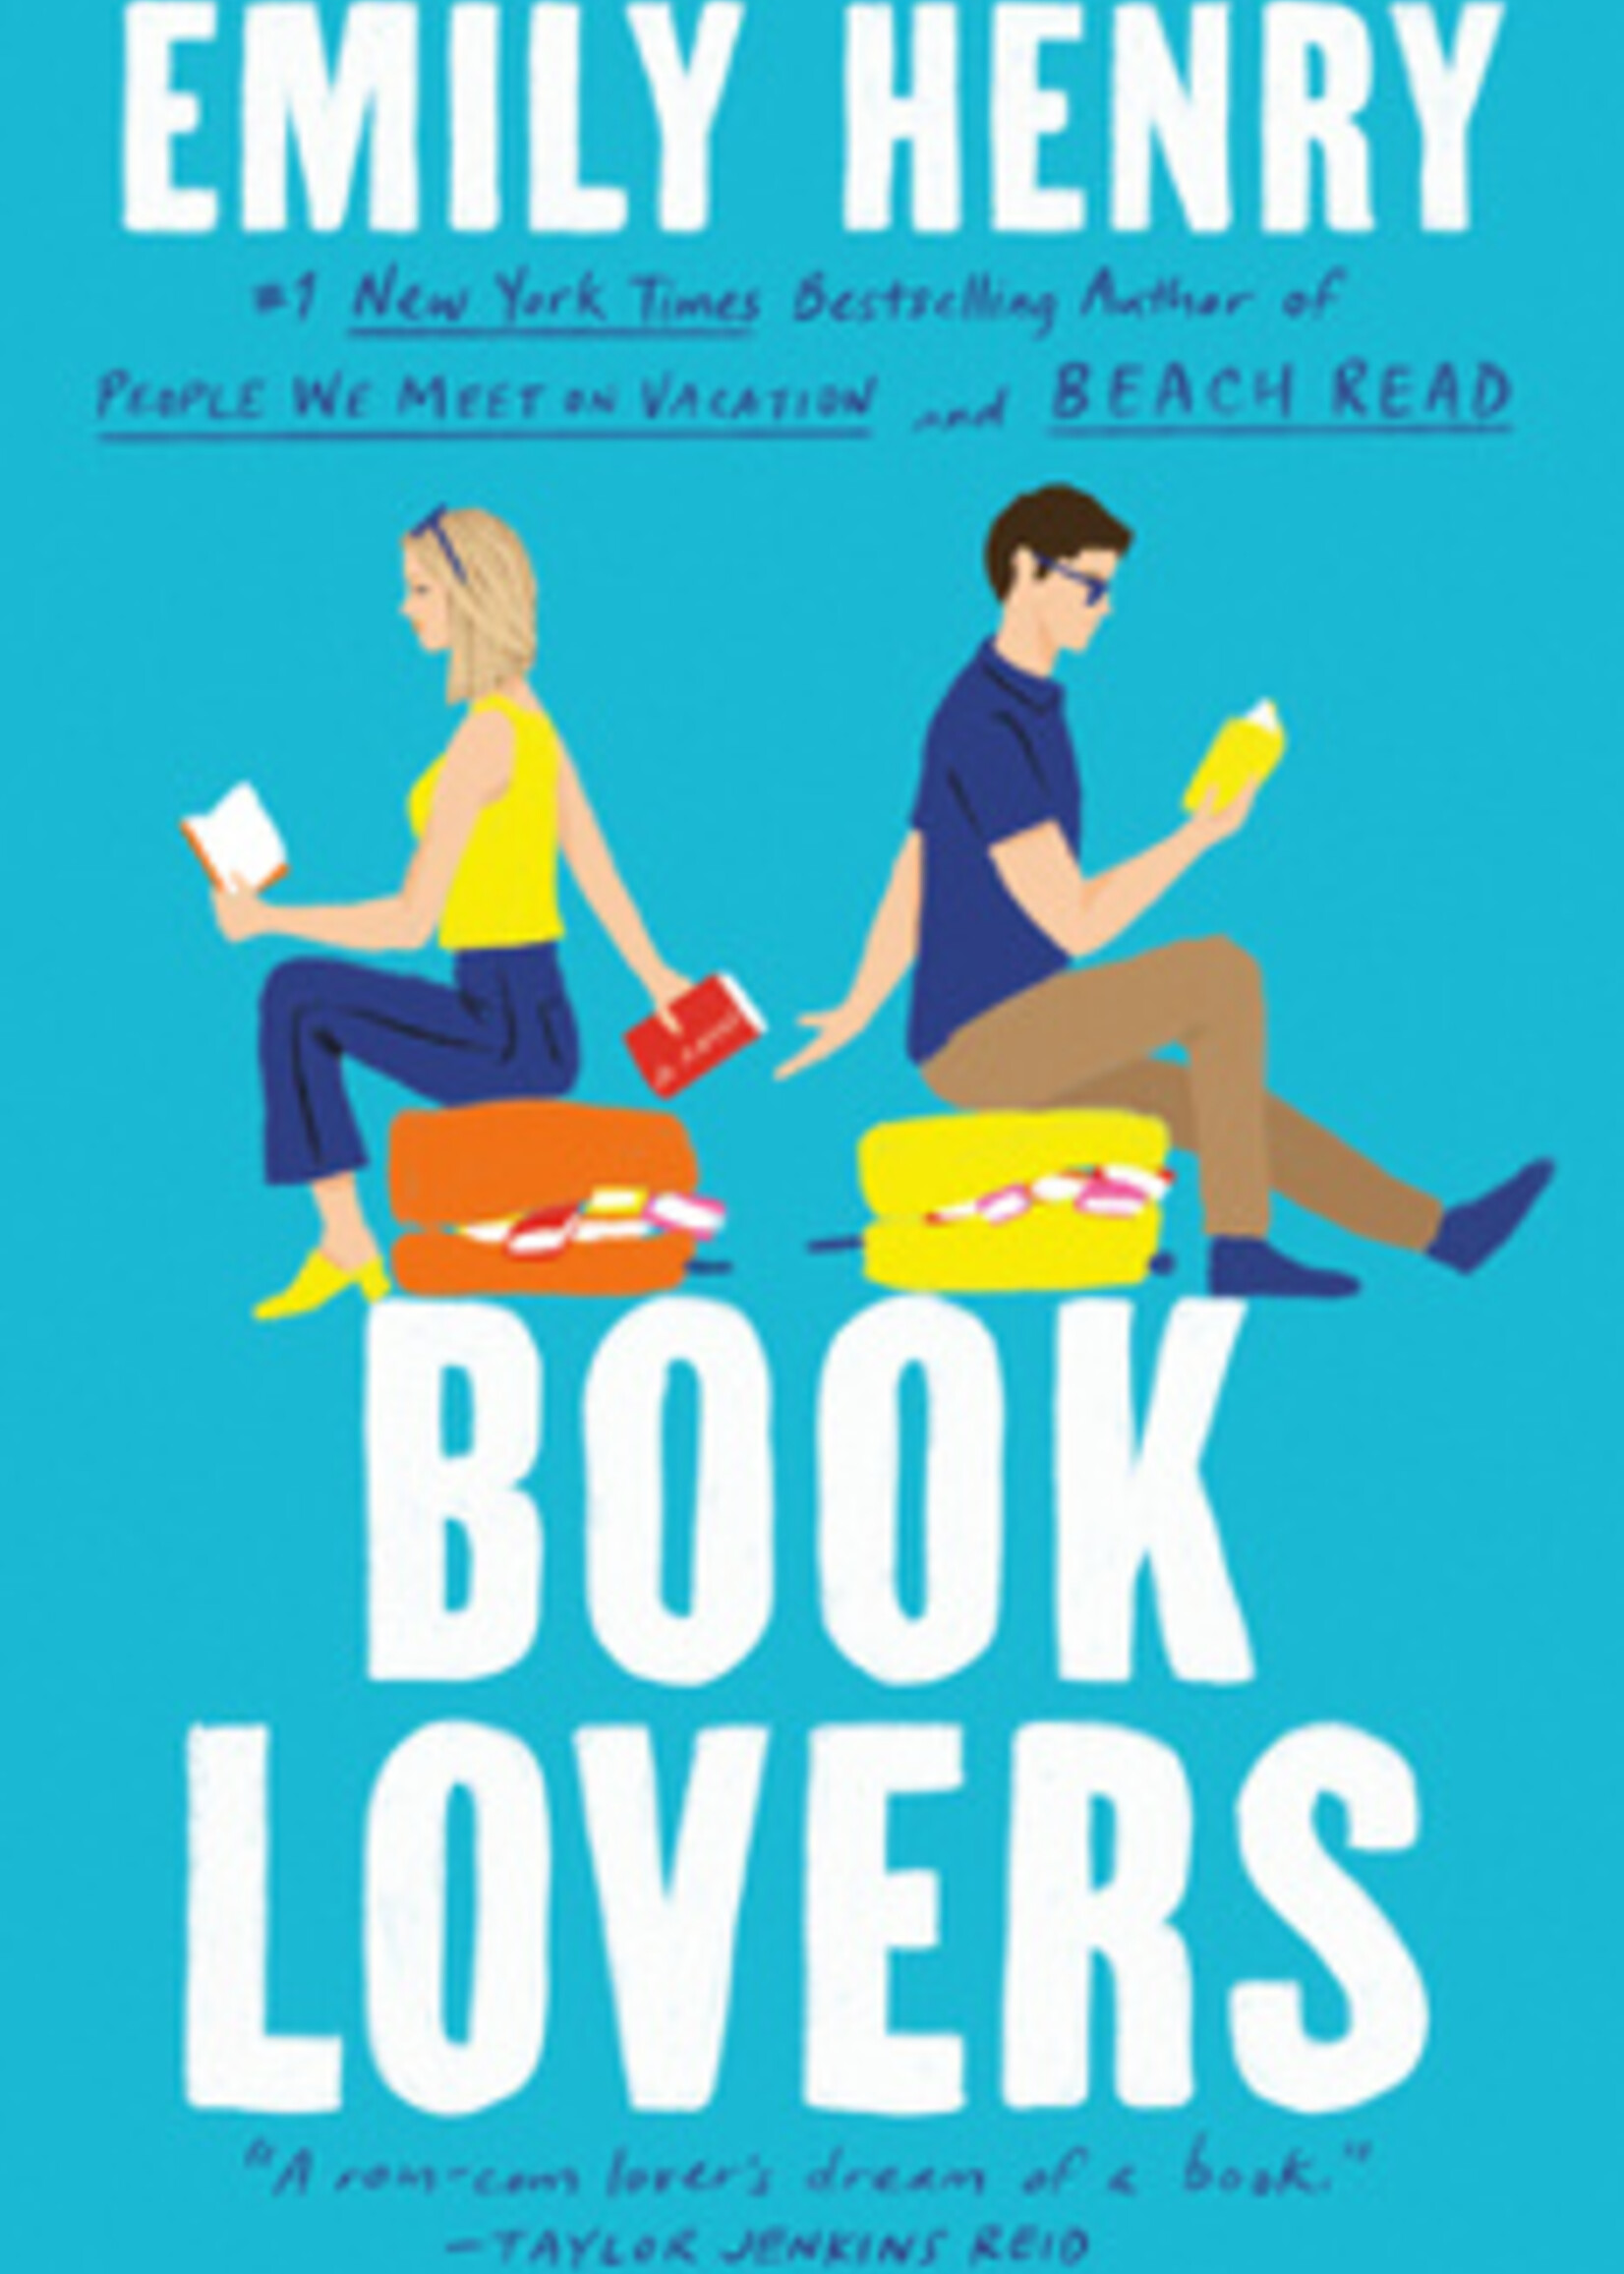 Berkley Books Book Lovers